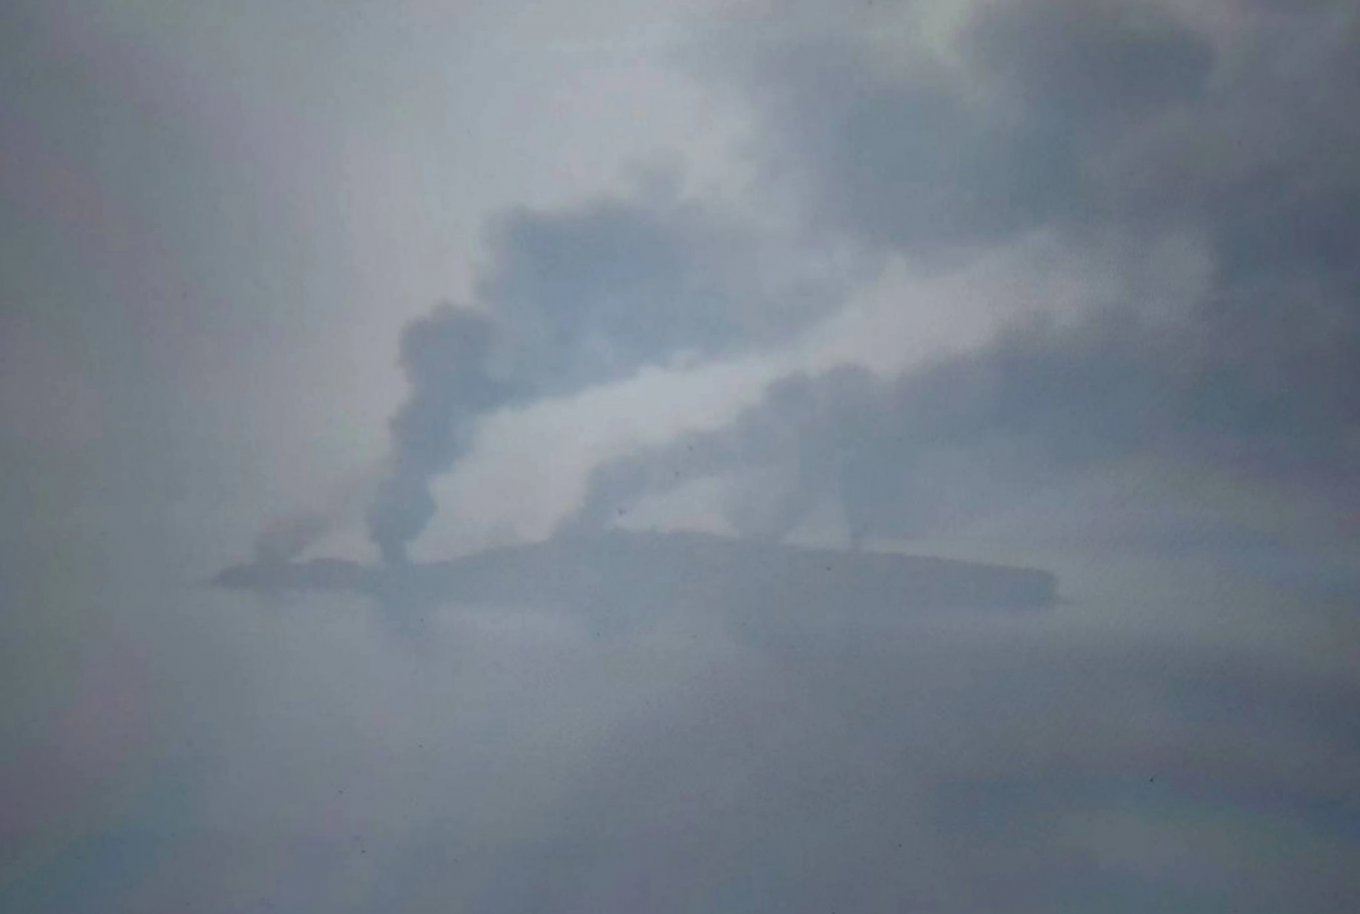 Smoke rising from Zmiinyi Island on Thursday morning